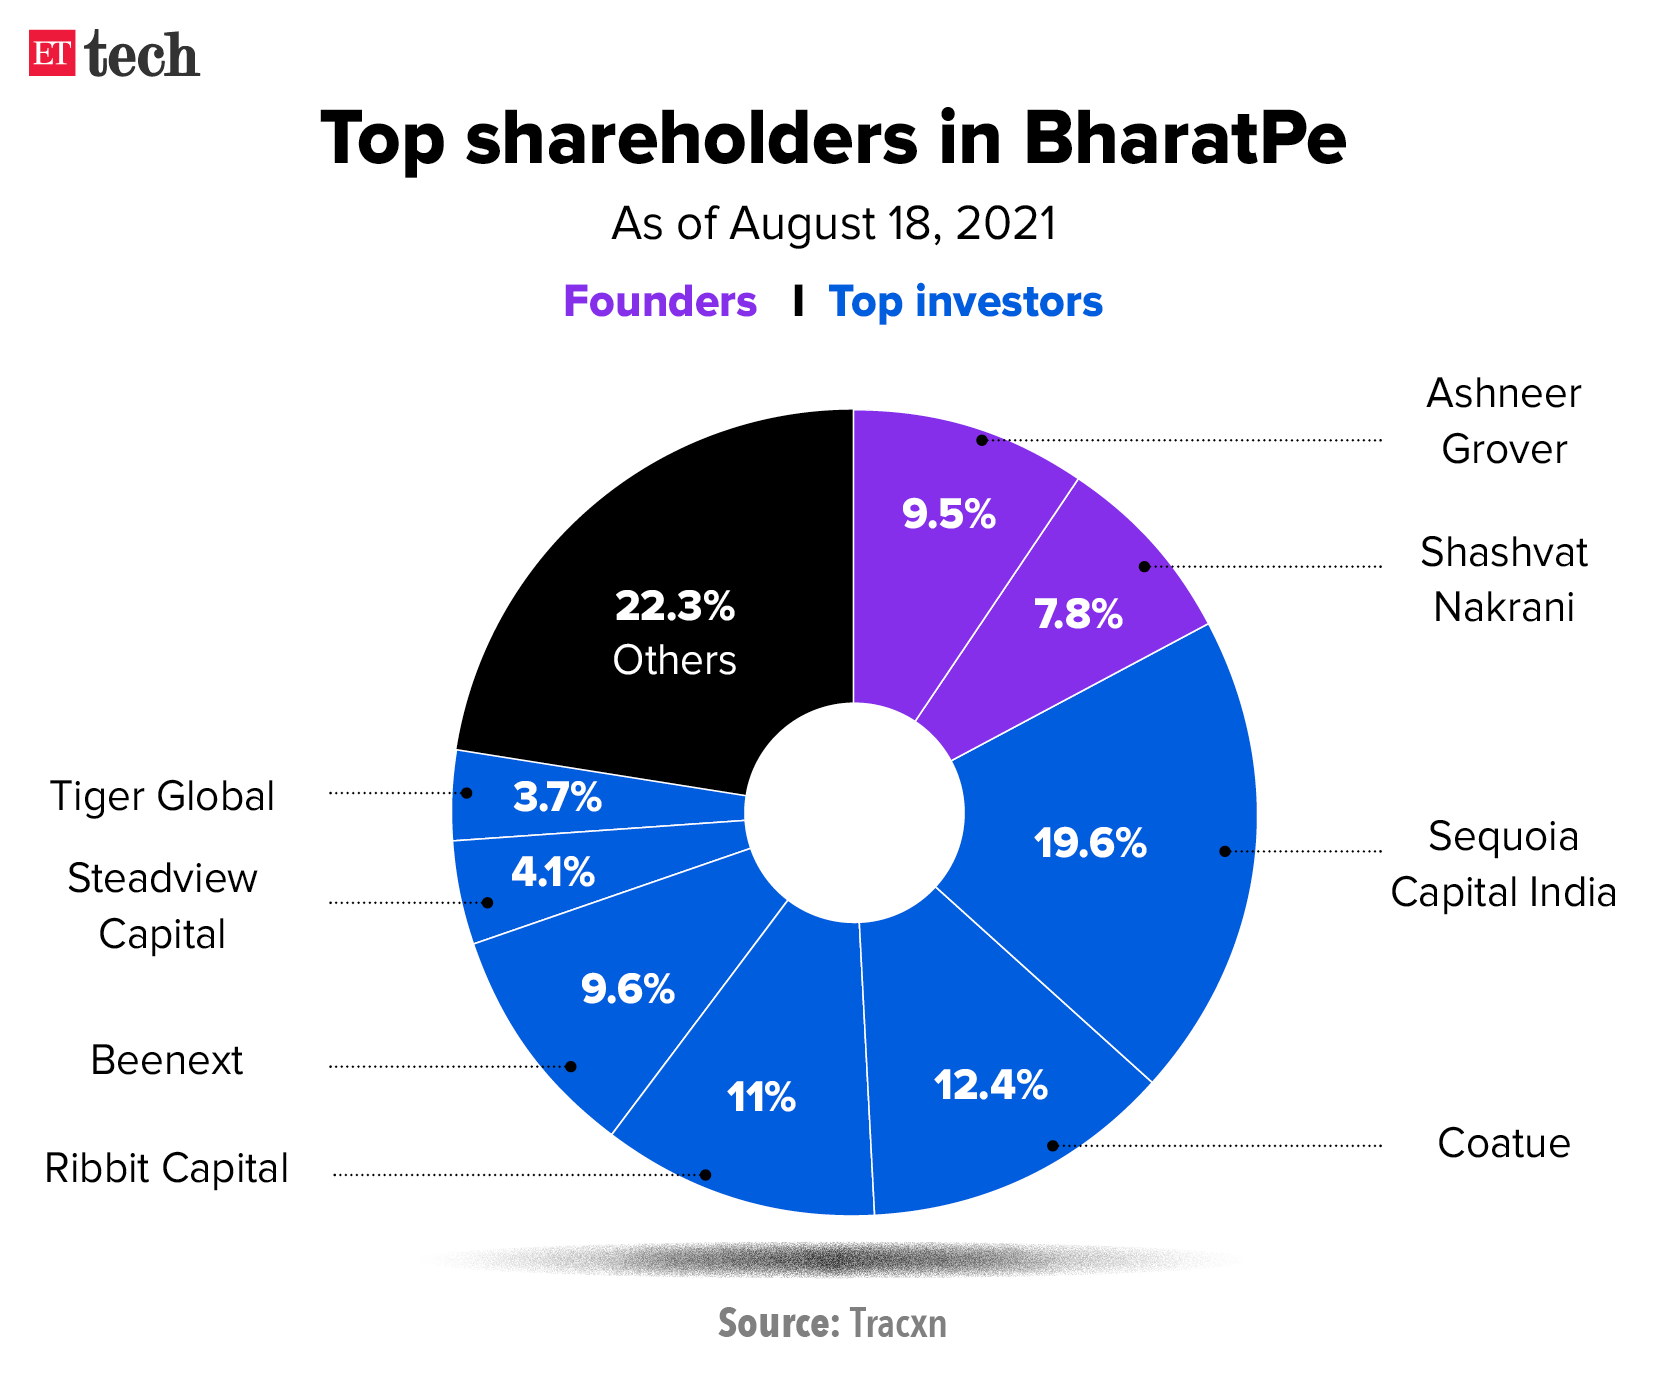 Top shareholders in BharatPe